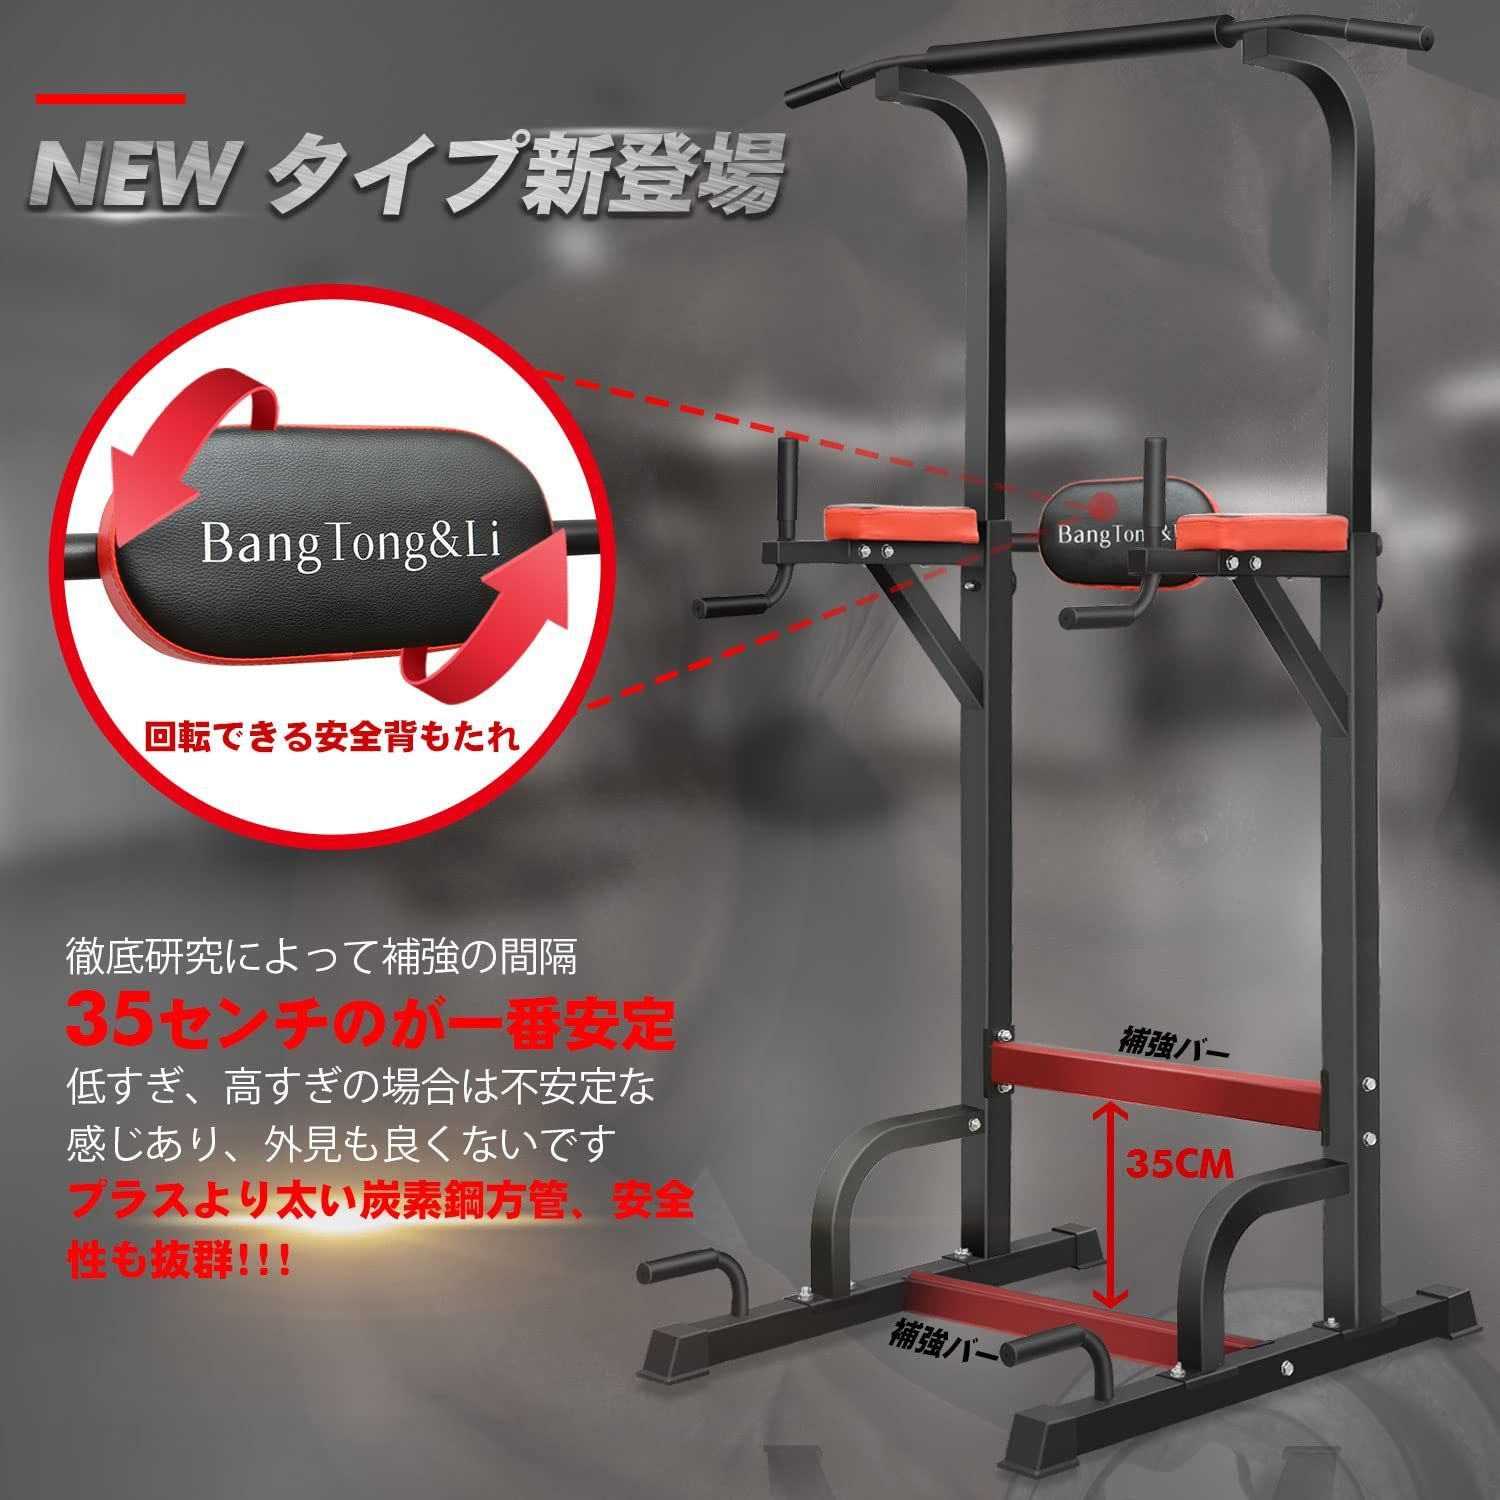 BangTong&Li ぶら下がり健康器 懸垂マシン 耐荷重150kg - トレーニング用品